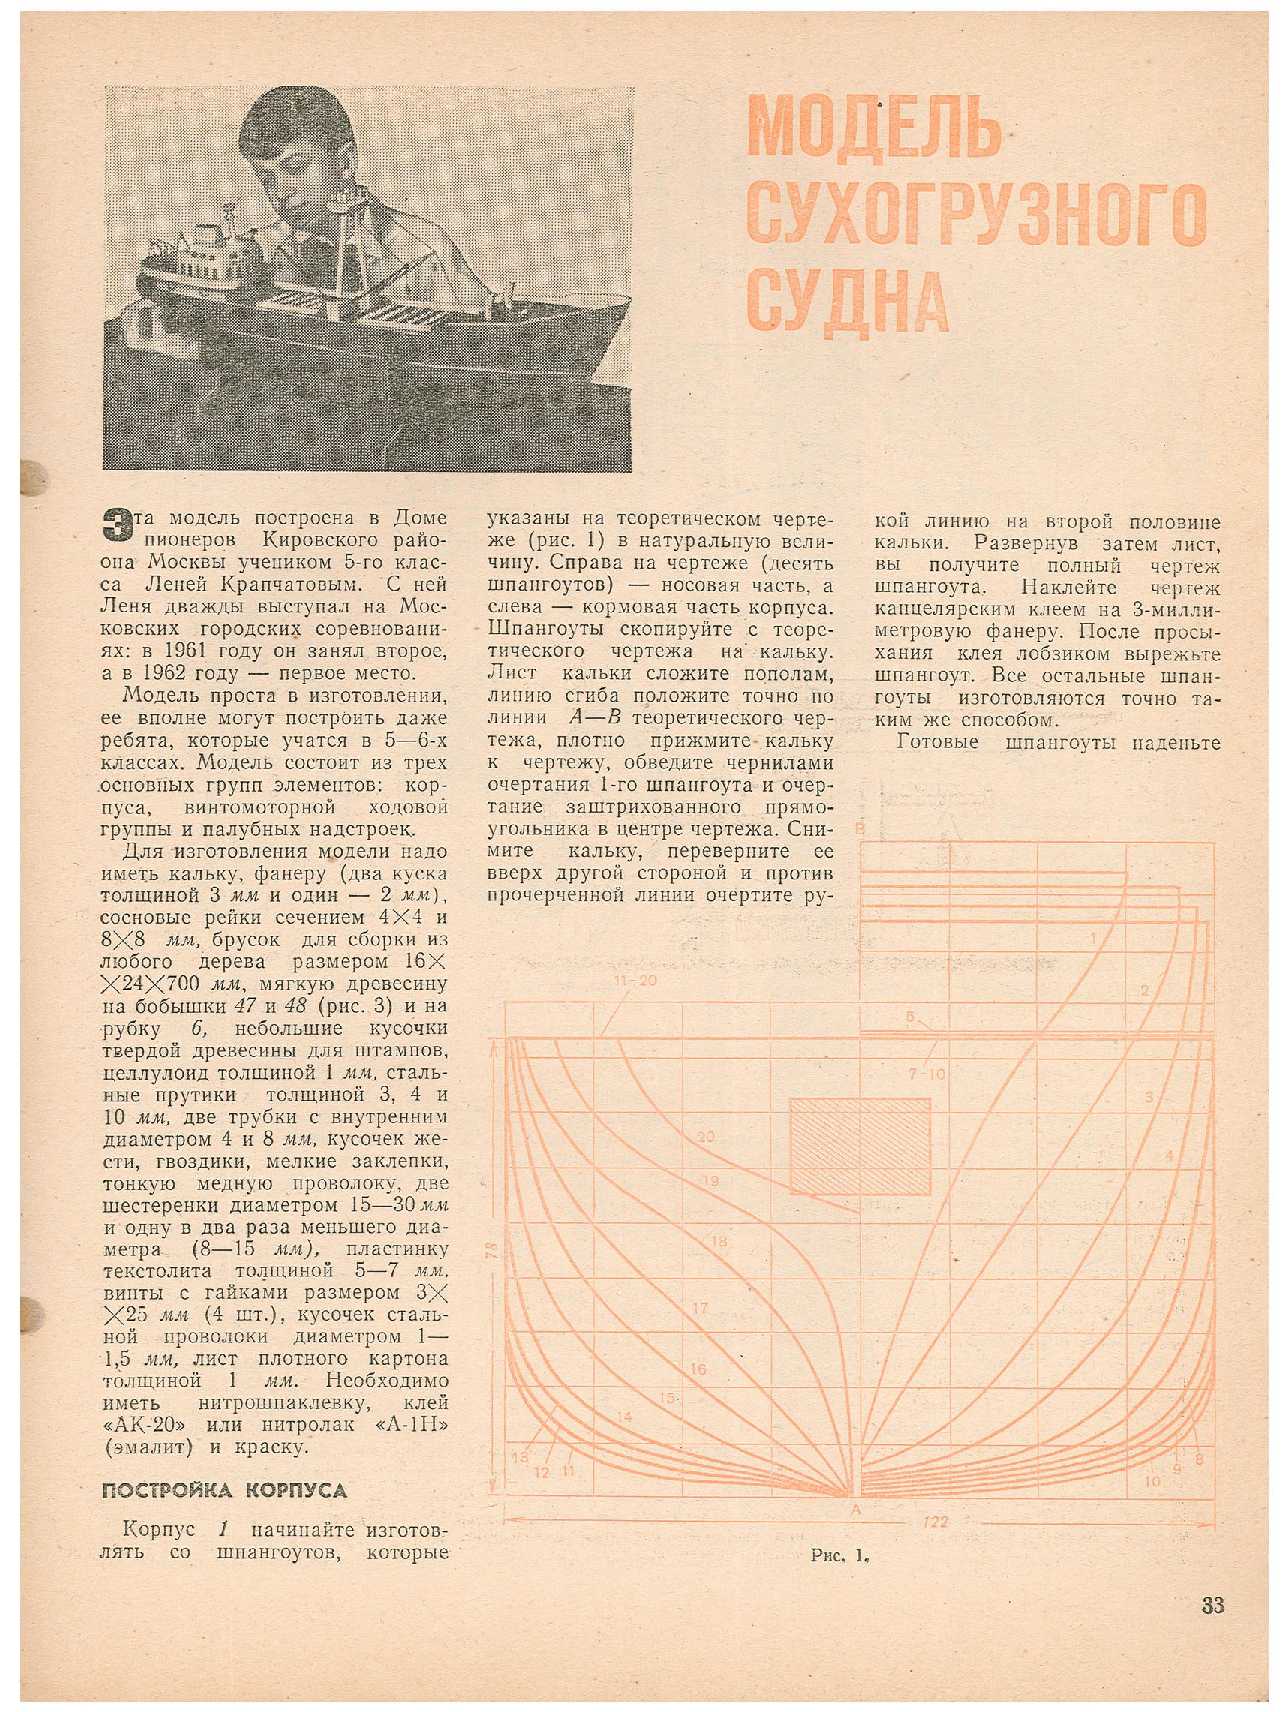 ЮМК 7, 1964, 33 c.